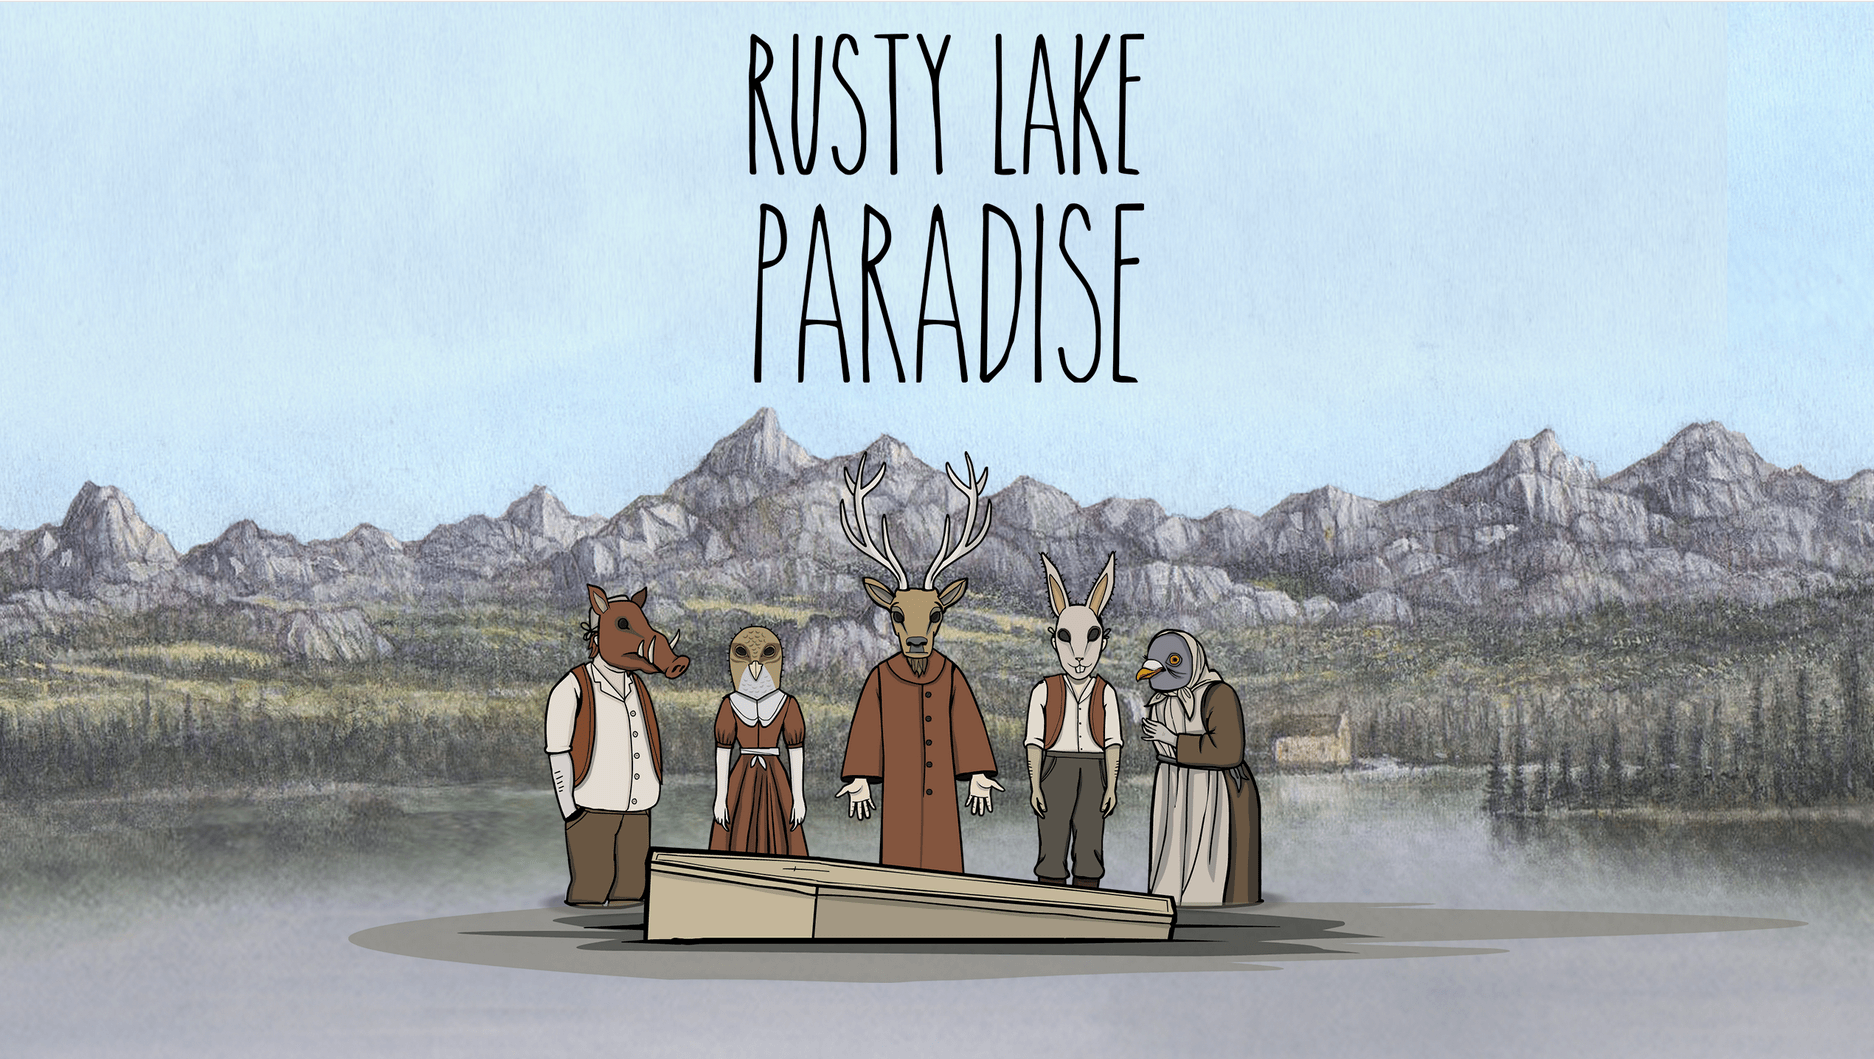 Paradise Lake Logo - Rusty Lake Paradise Official Logo